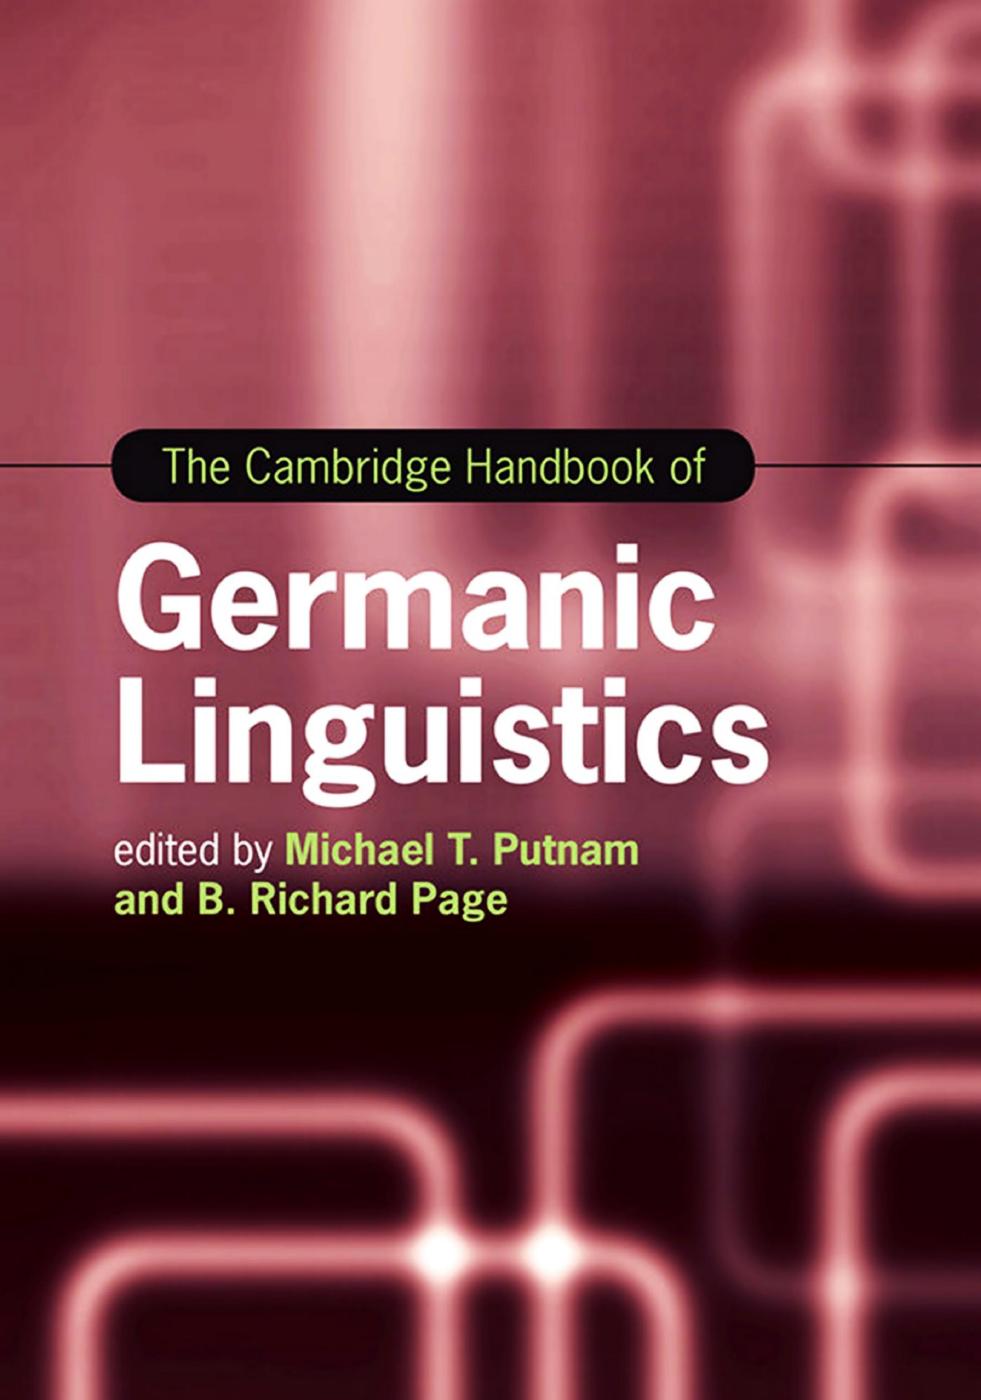 The Cambridge Handbook of Germanic Linguistics